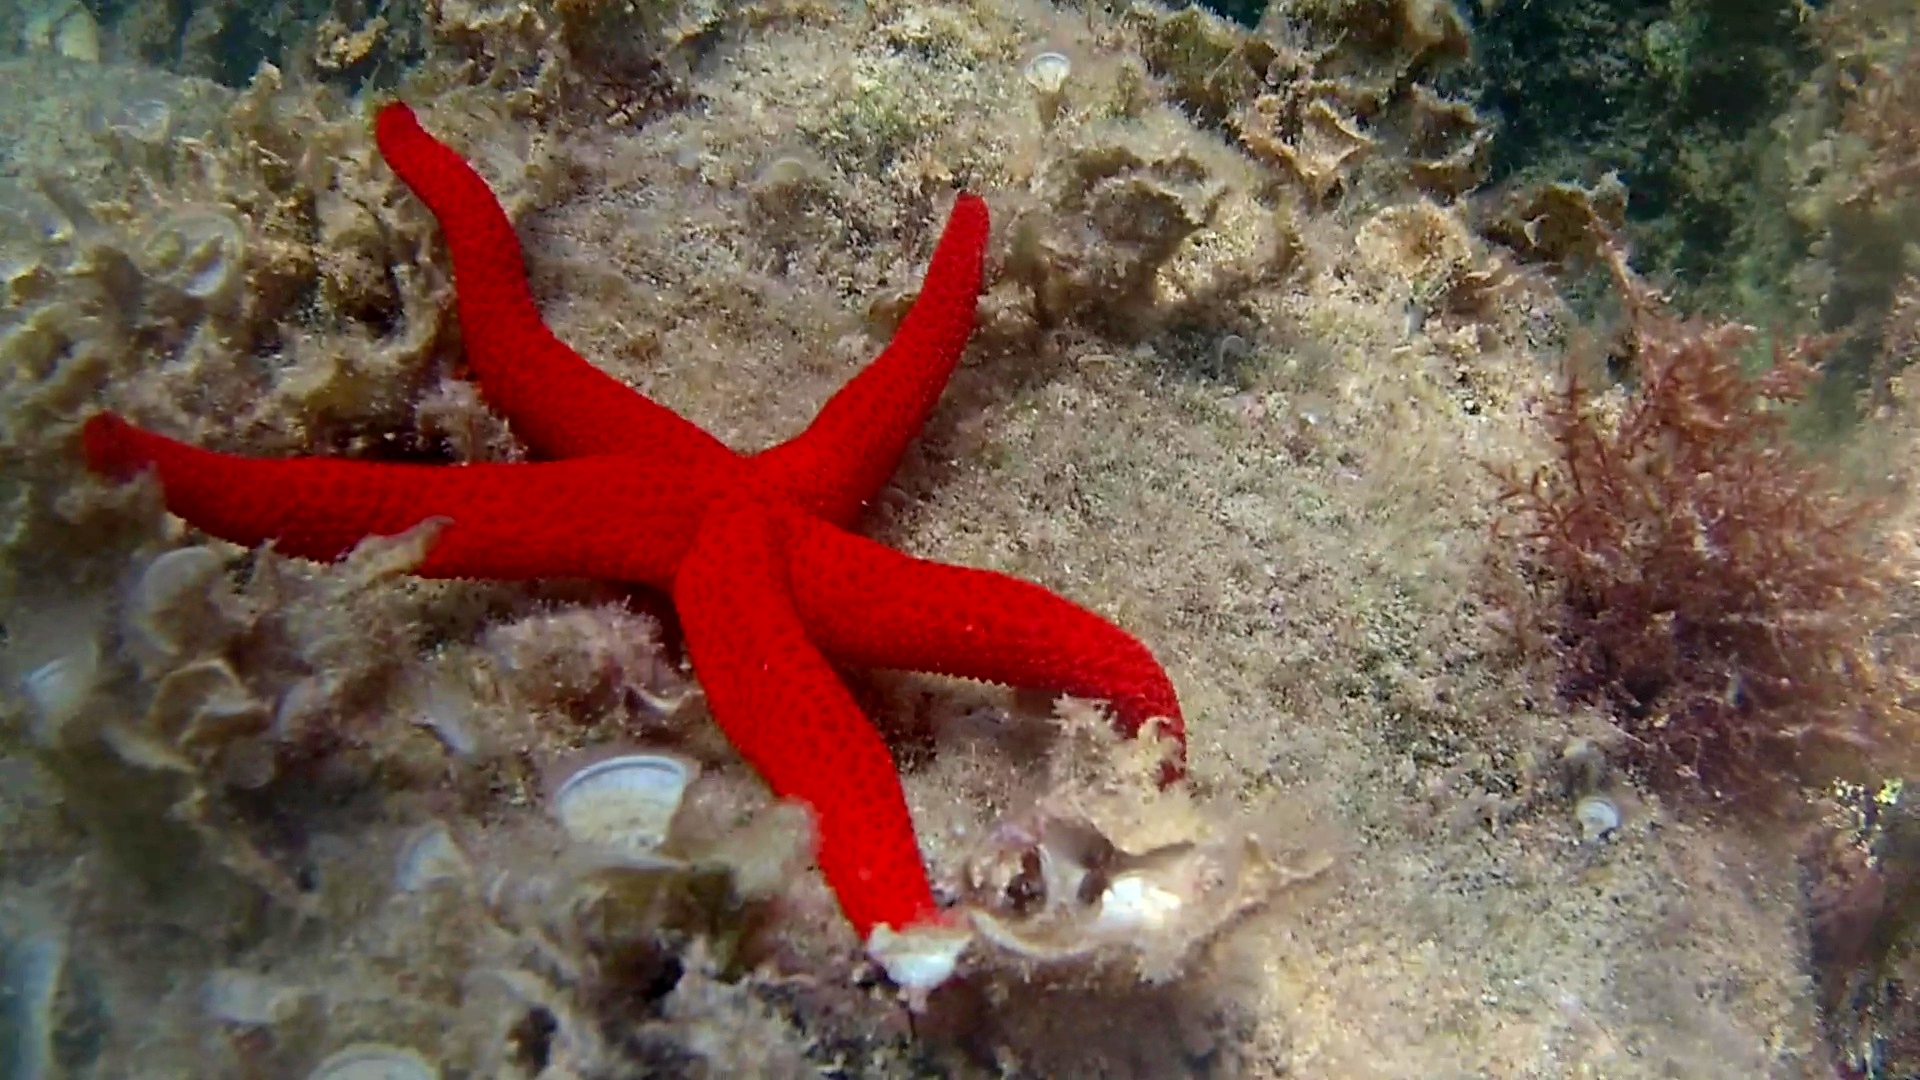 Stella Marina rossa - Echinaster sepositus - Star red of Mediterranean sea - intotheblue.it